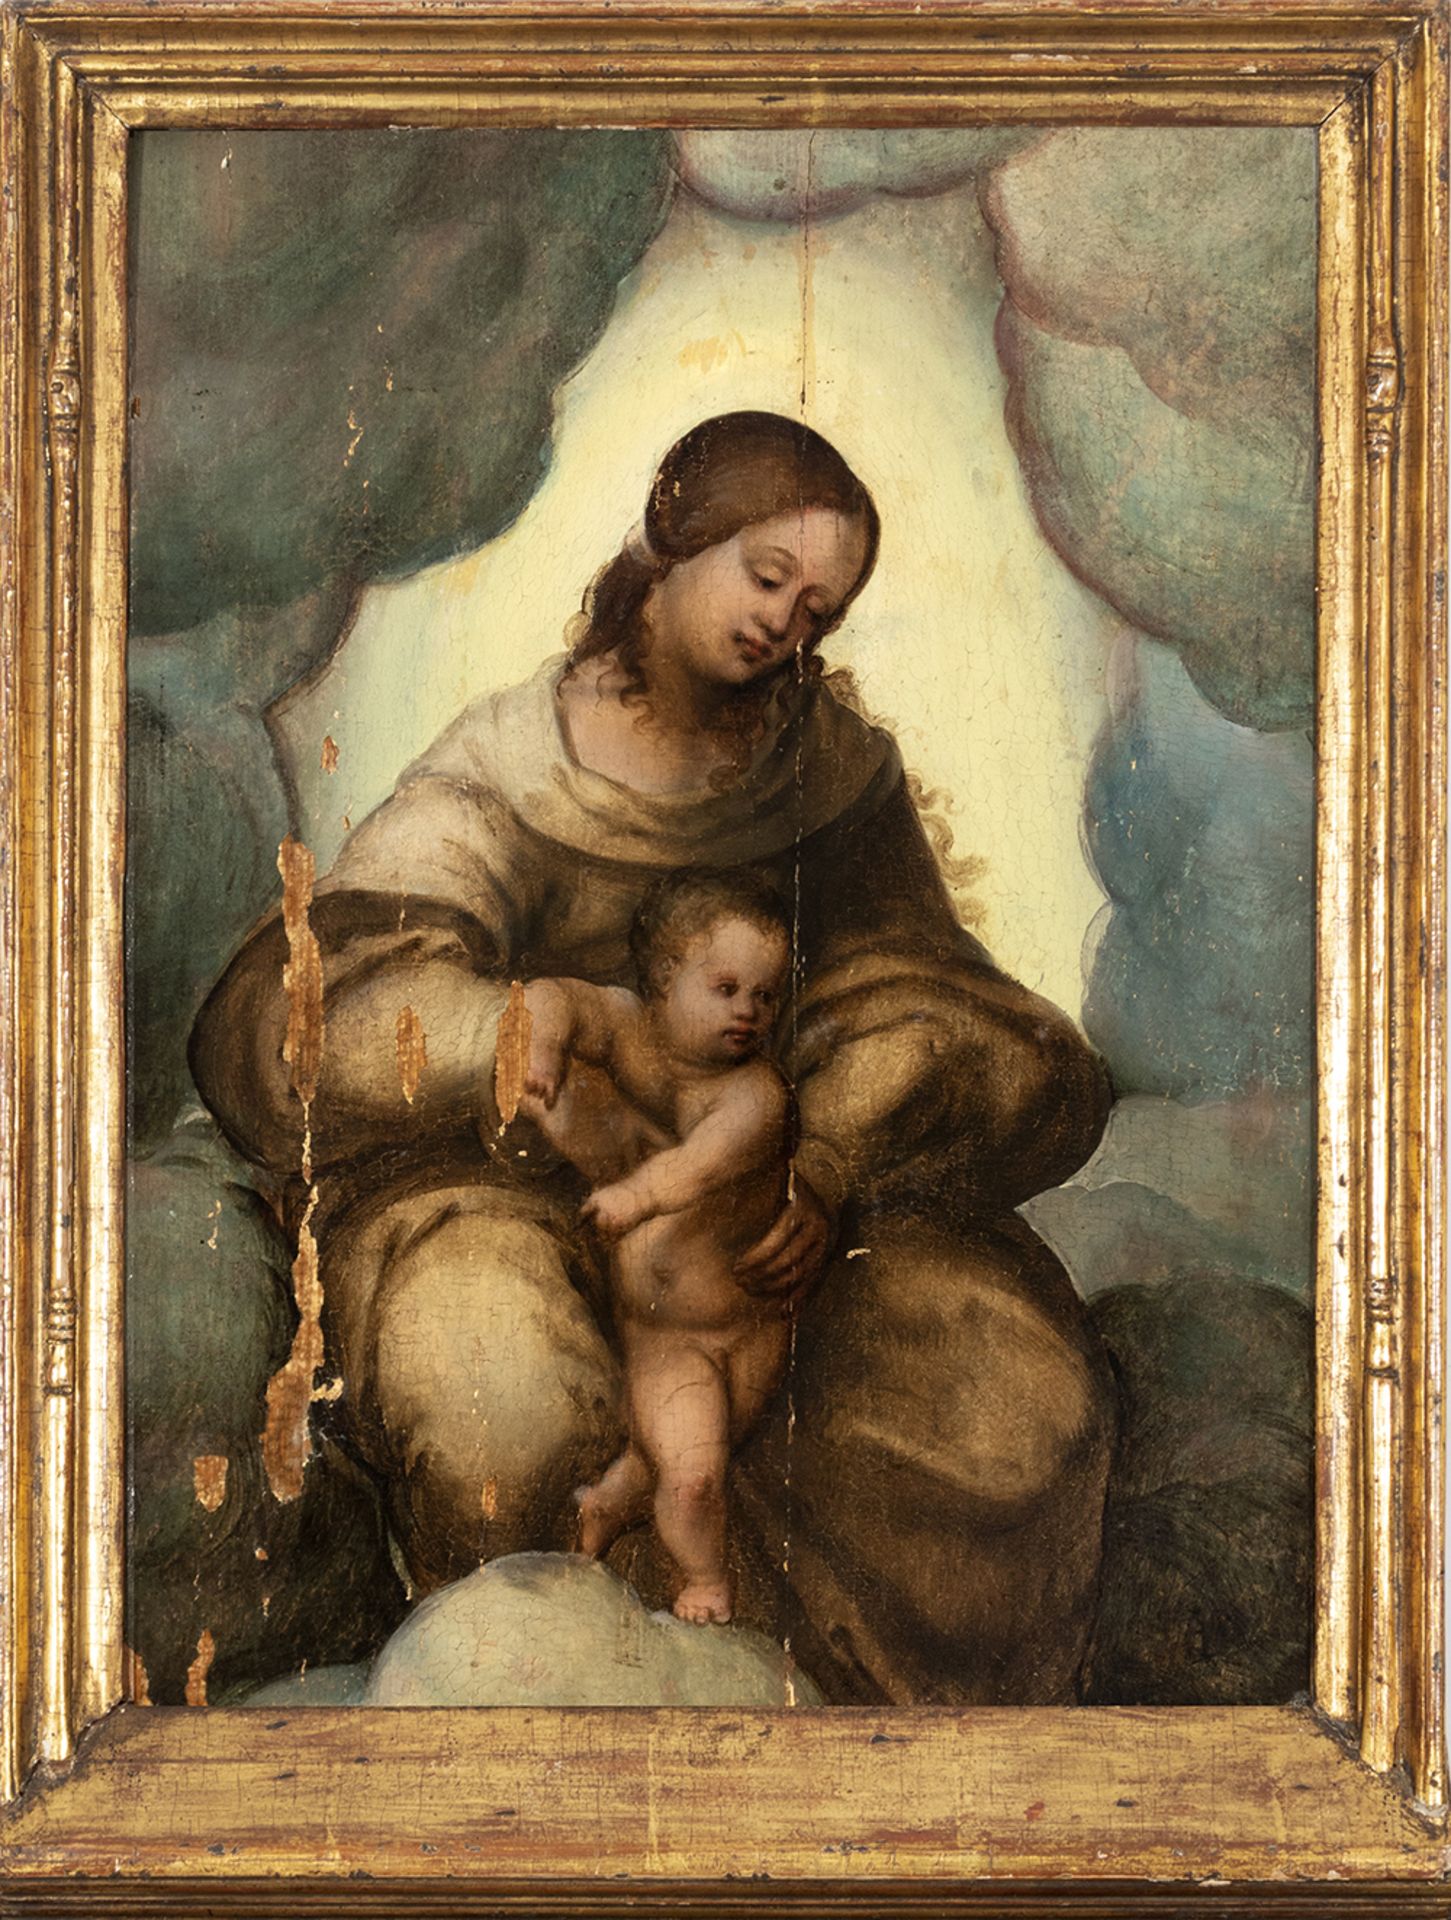 Flemish school,16th century. Virgin with Child.